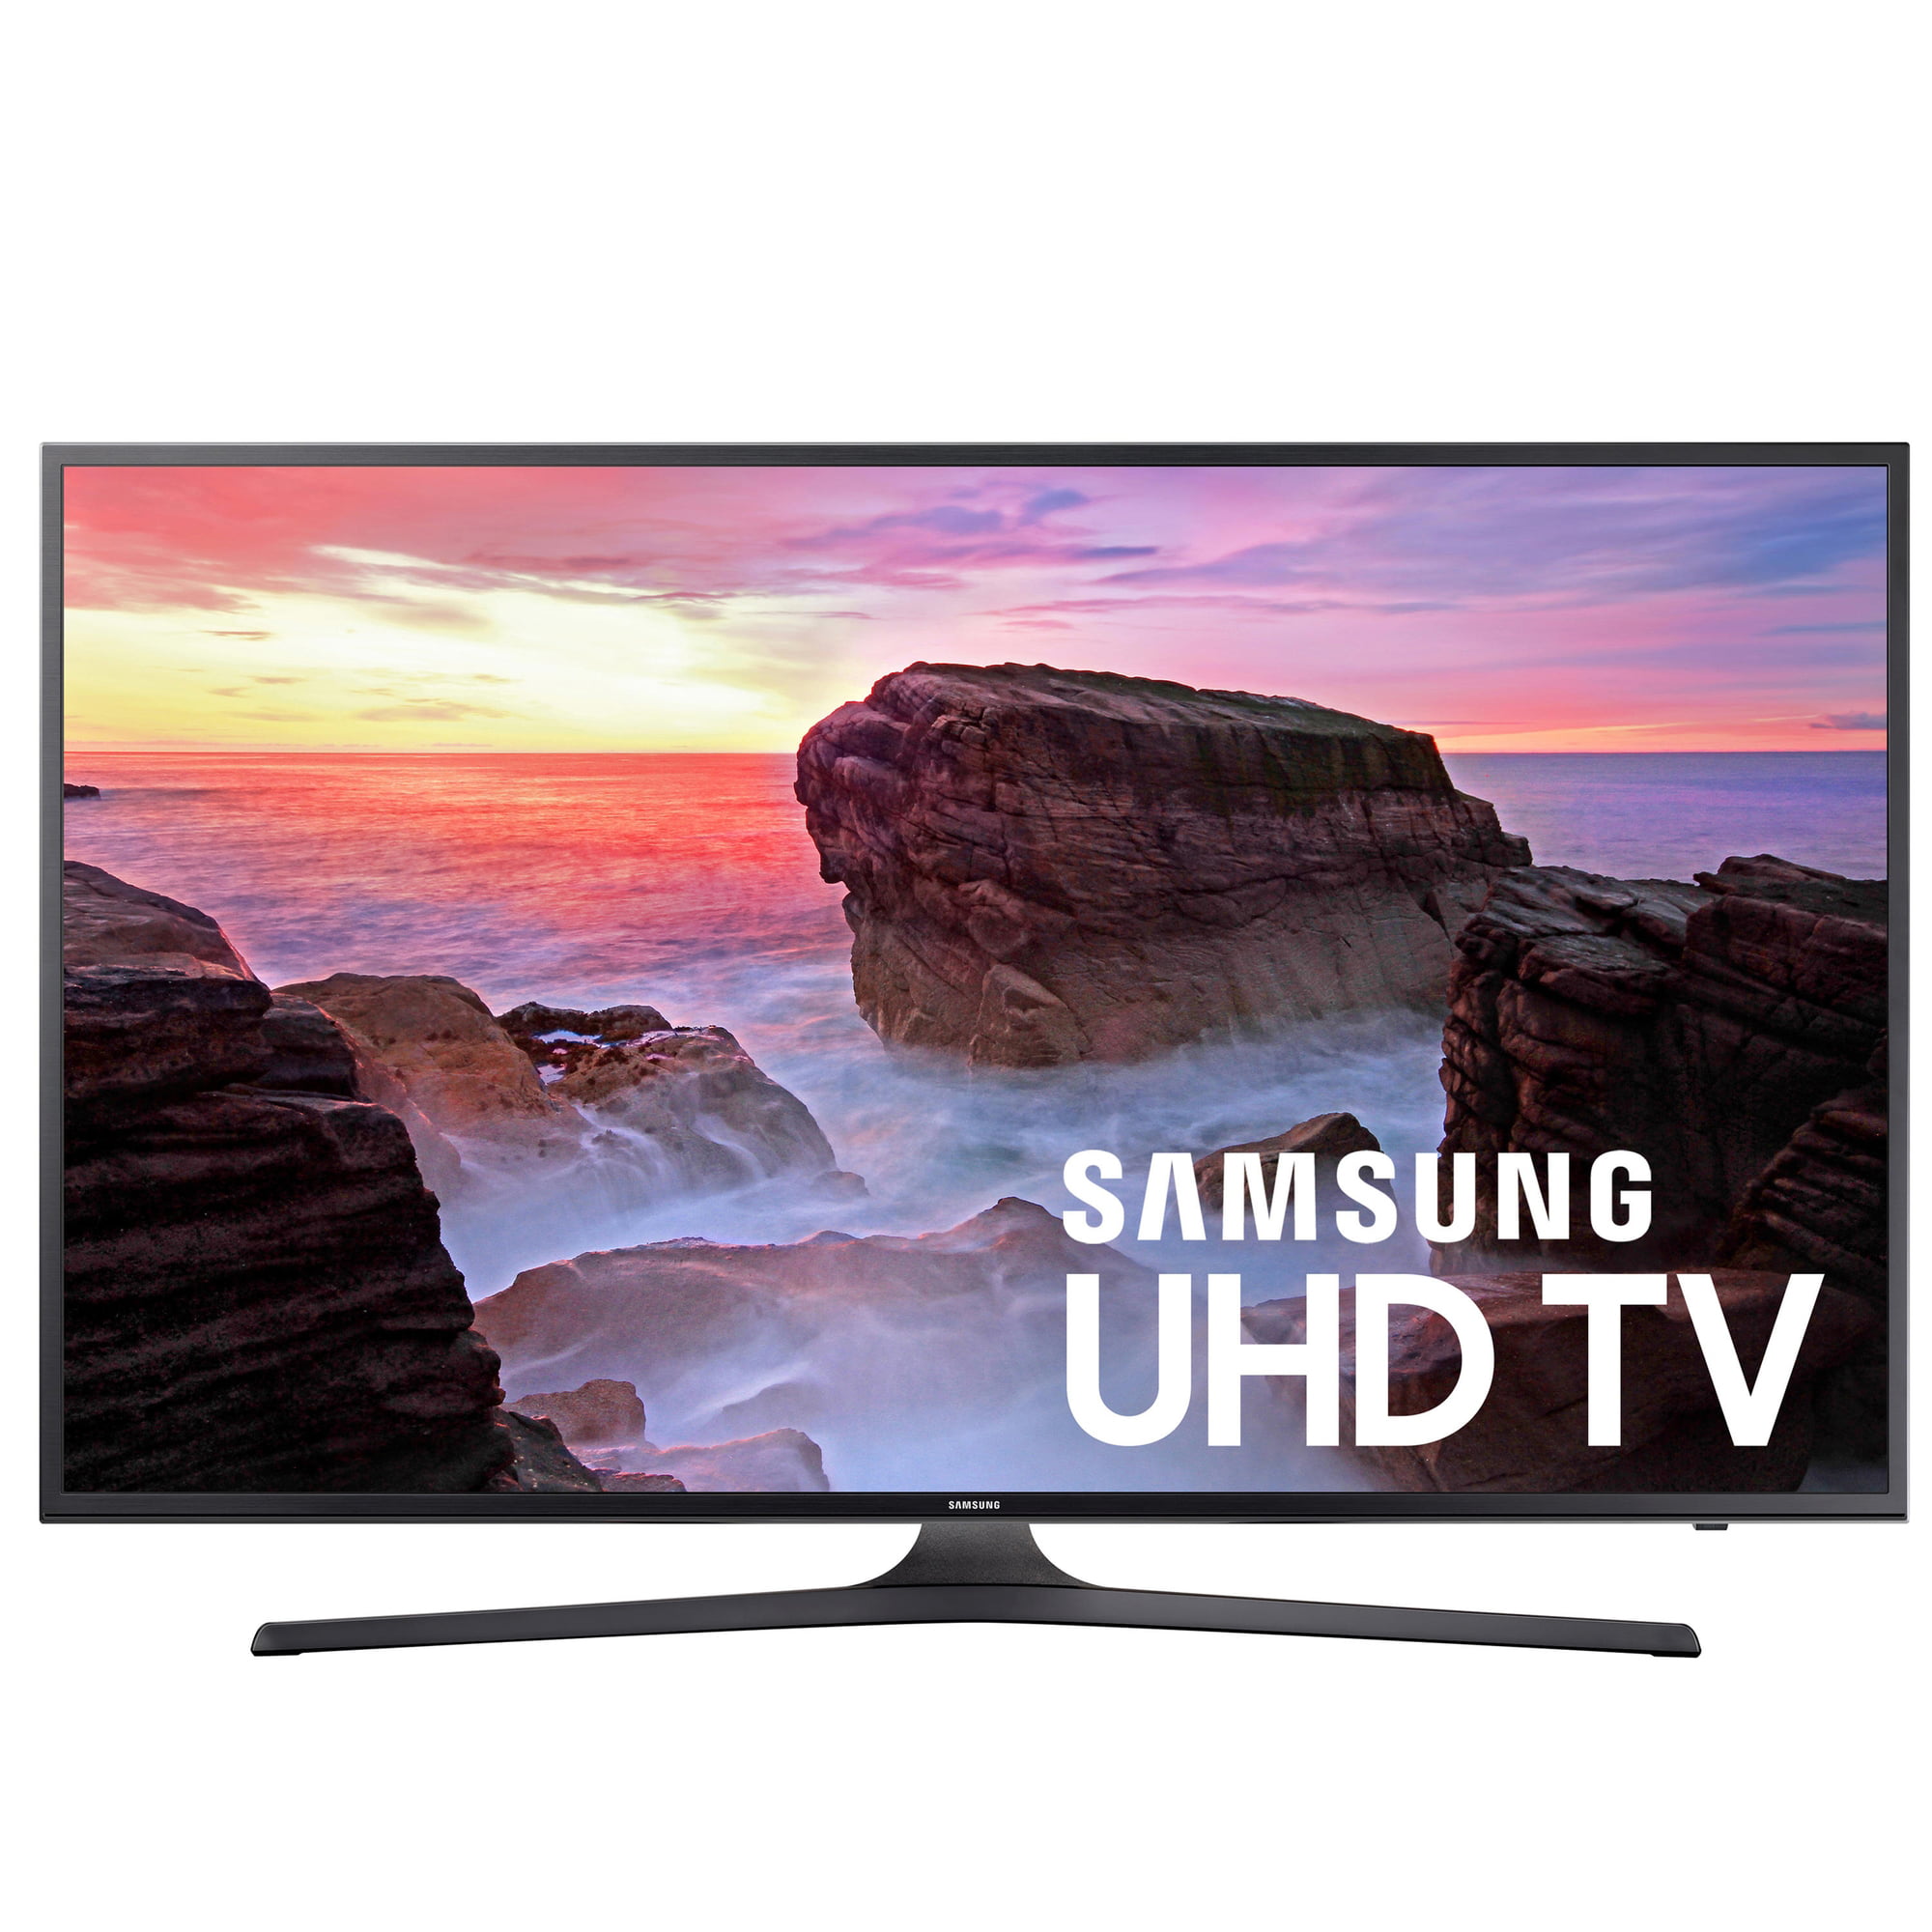 Restored Samsung 40 Class 4k 2160p Smart Led Tv 40mu6300